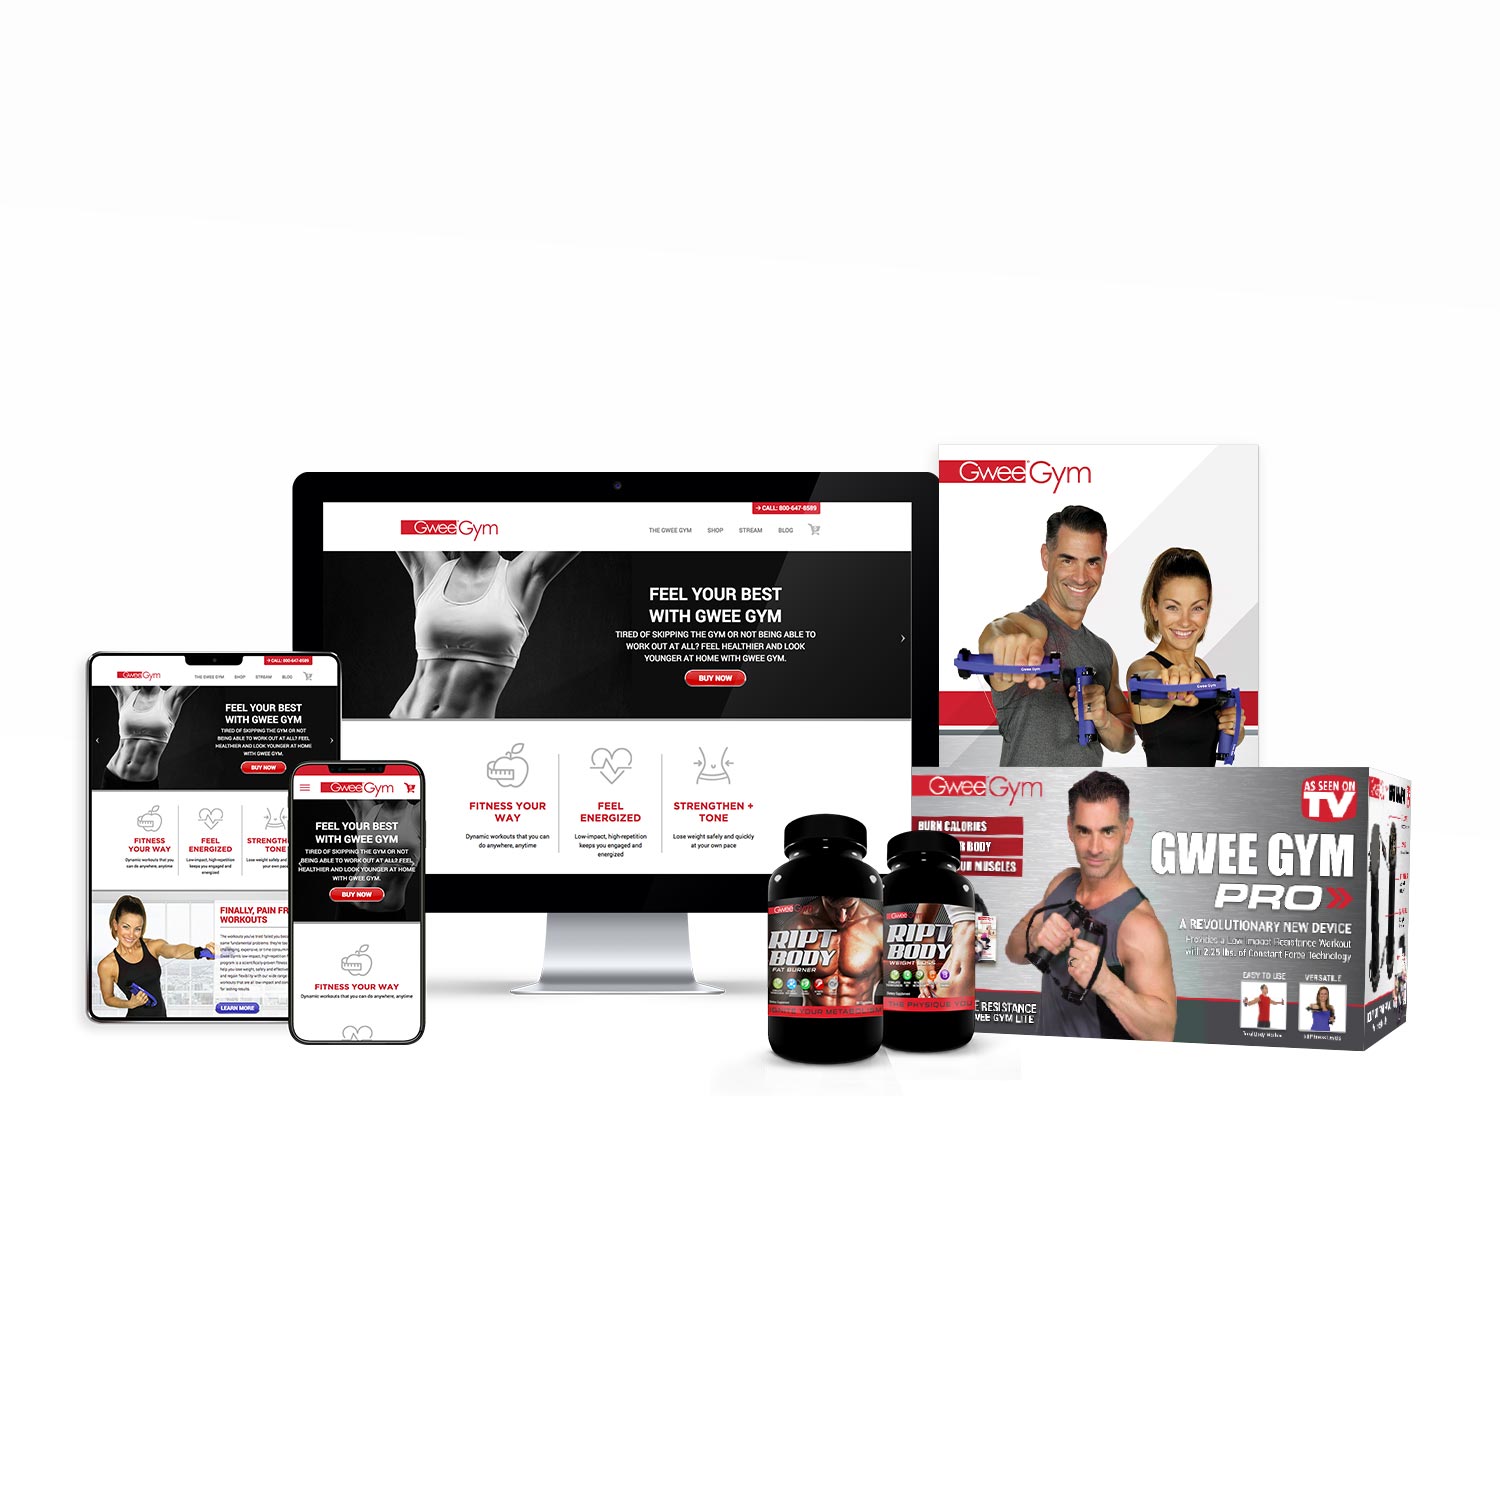 Website design, print design, product packaging design for Gwee Gym.